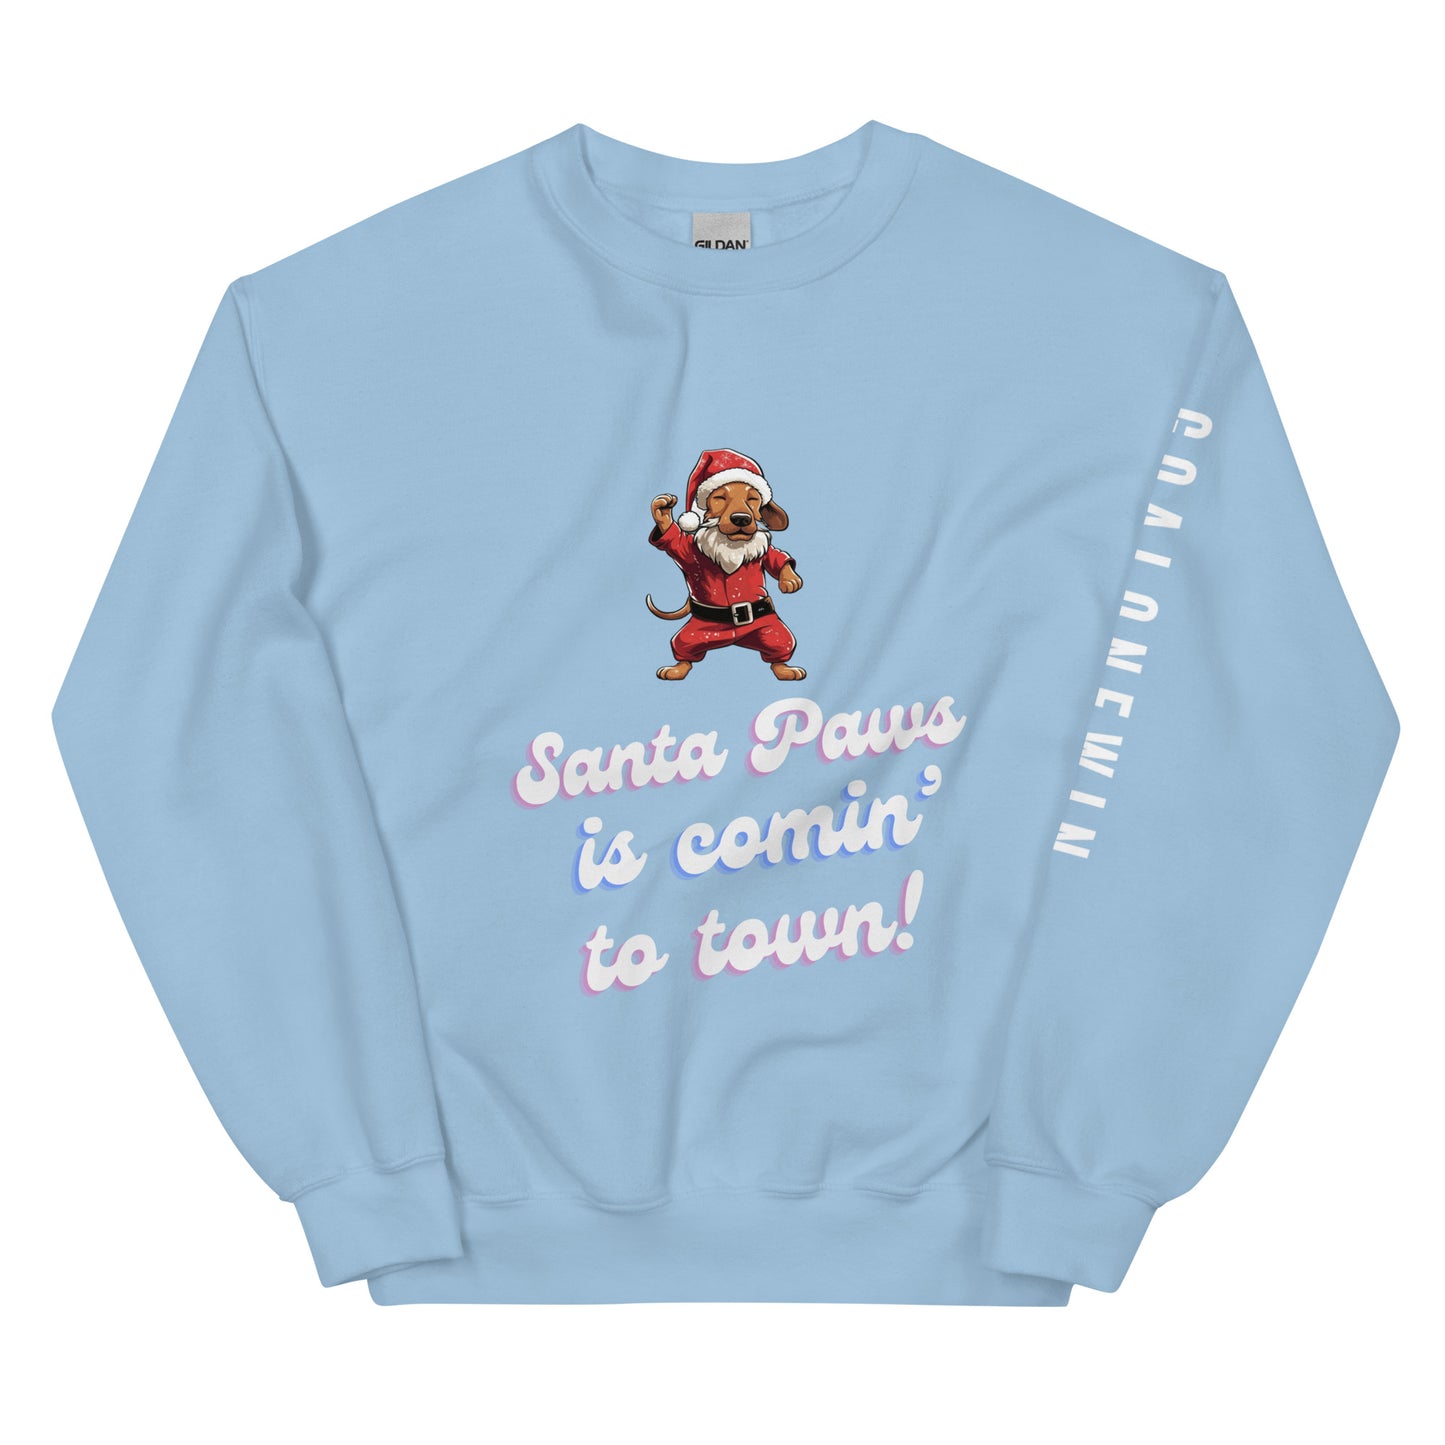 Santa Paws Is Comin' To Town! Sweatshirt